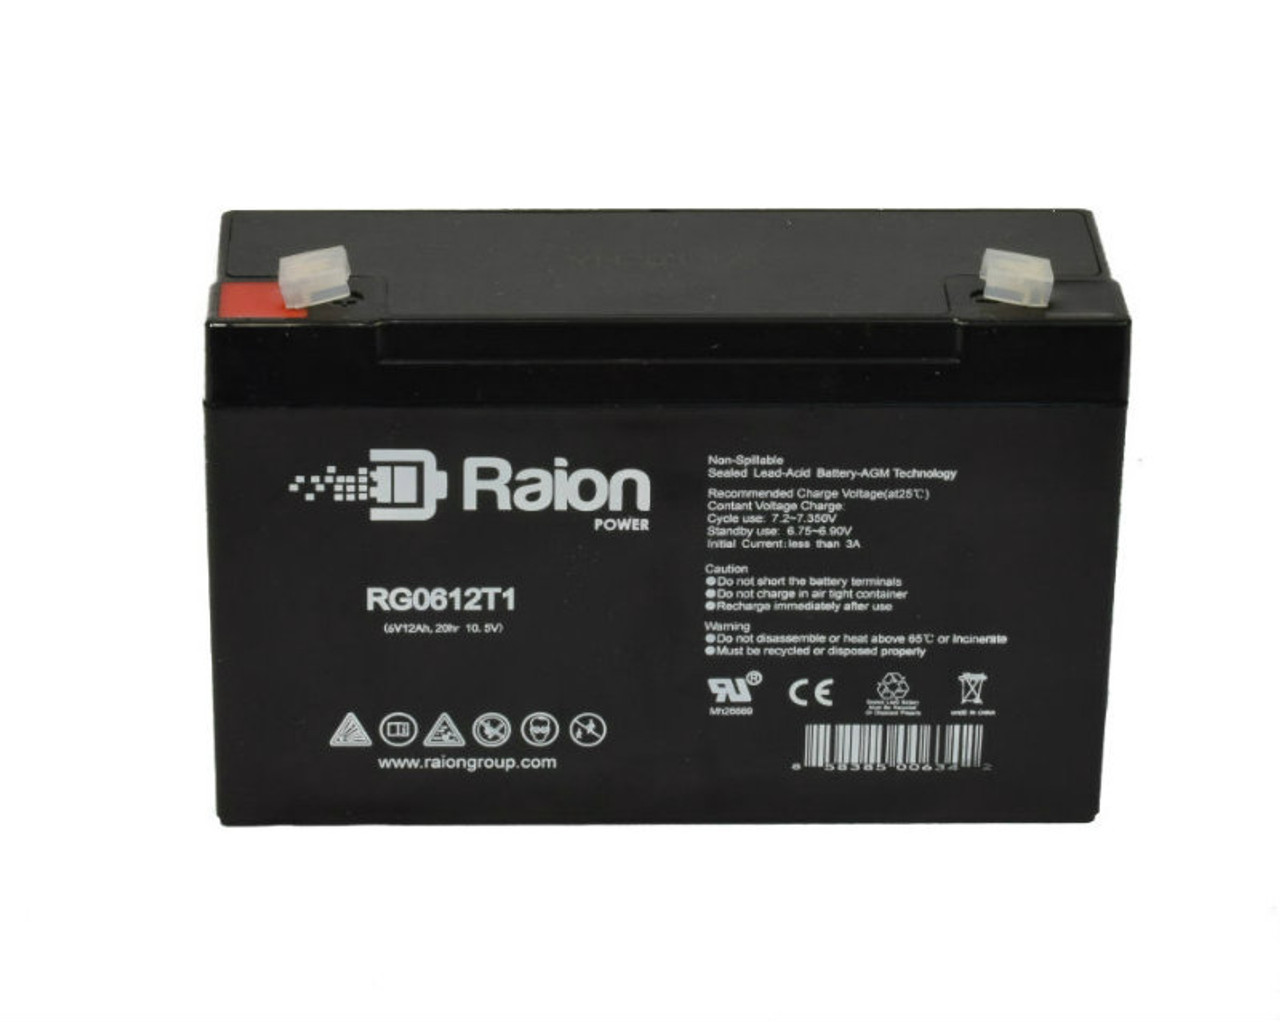 Raion Power RG06120T1 Replacement Battery Cartridge for APC AP900